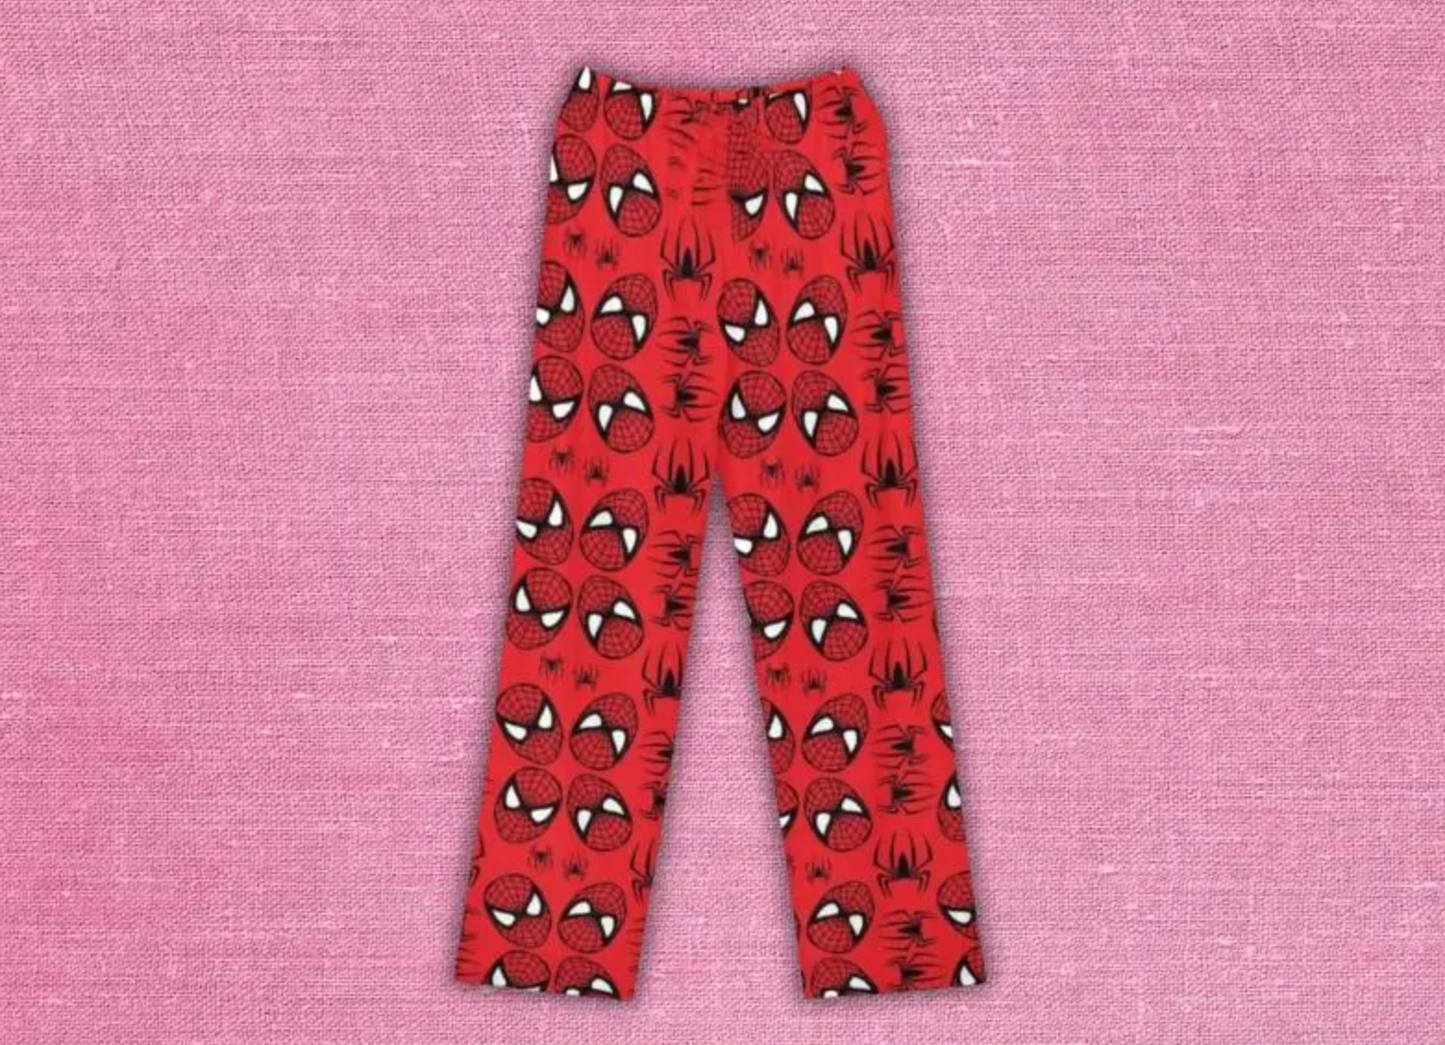 Spiderman x Hello Kitty PJ Pants